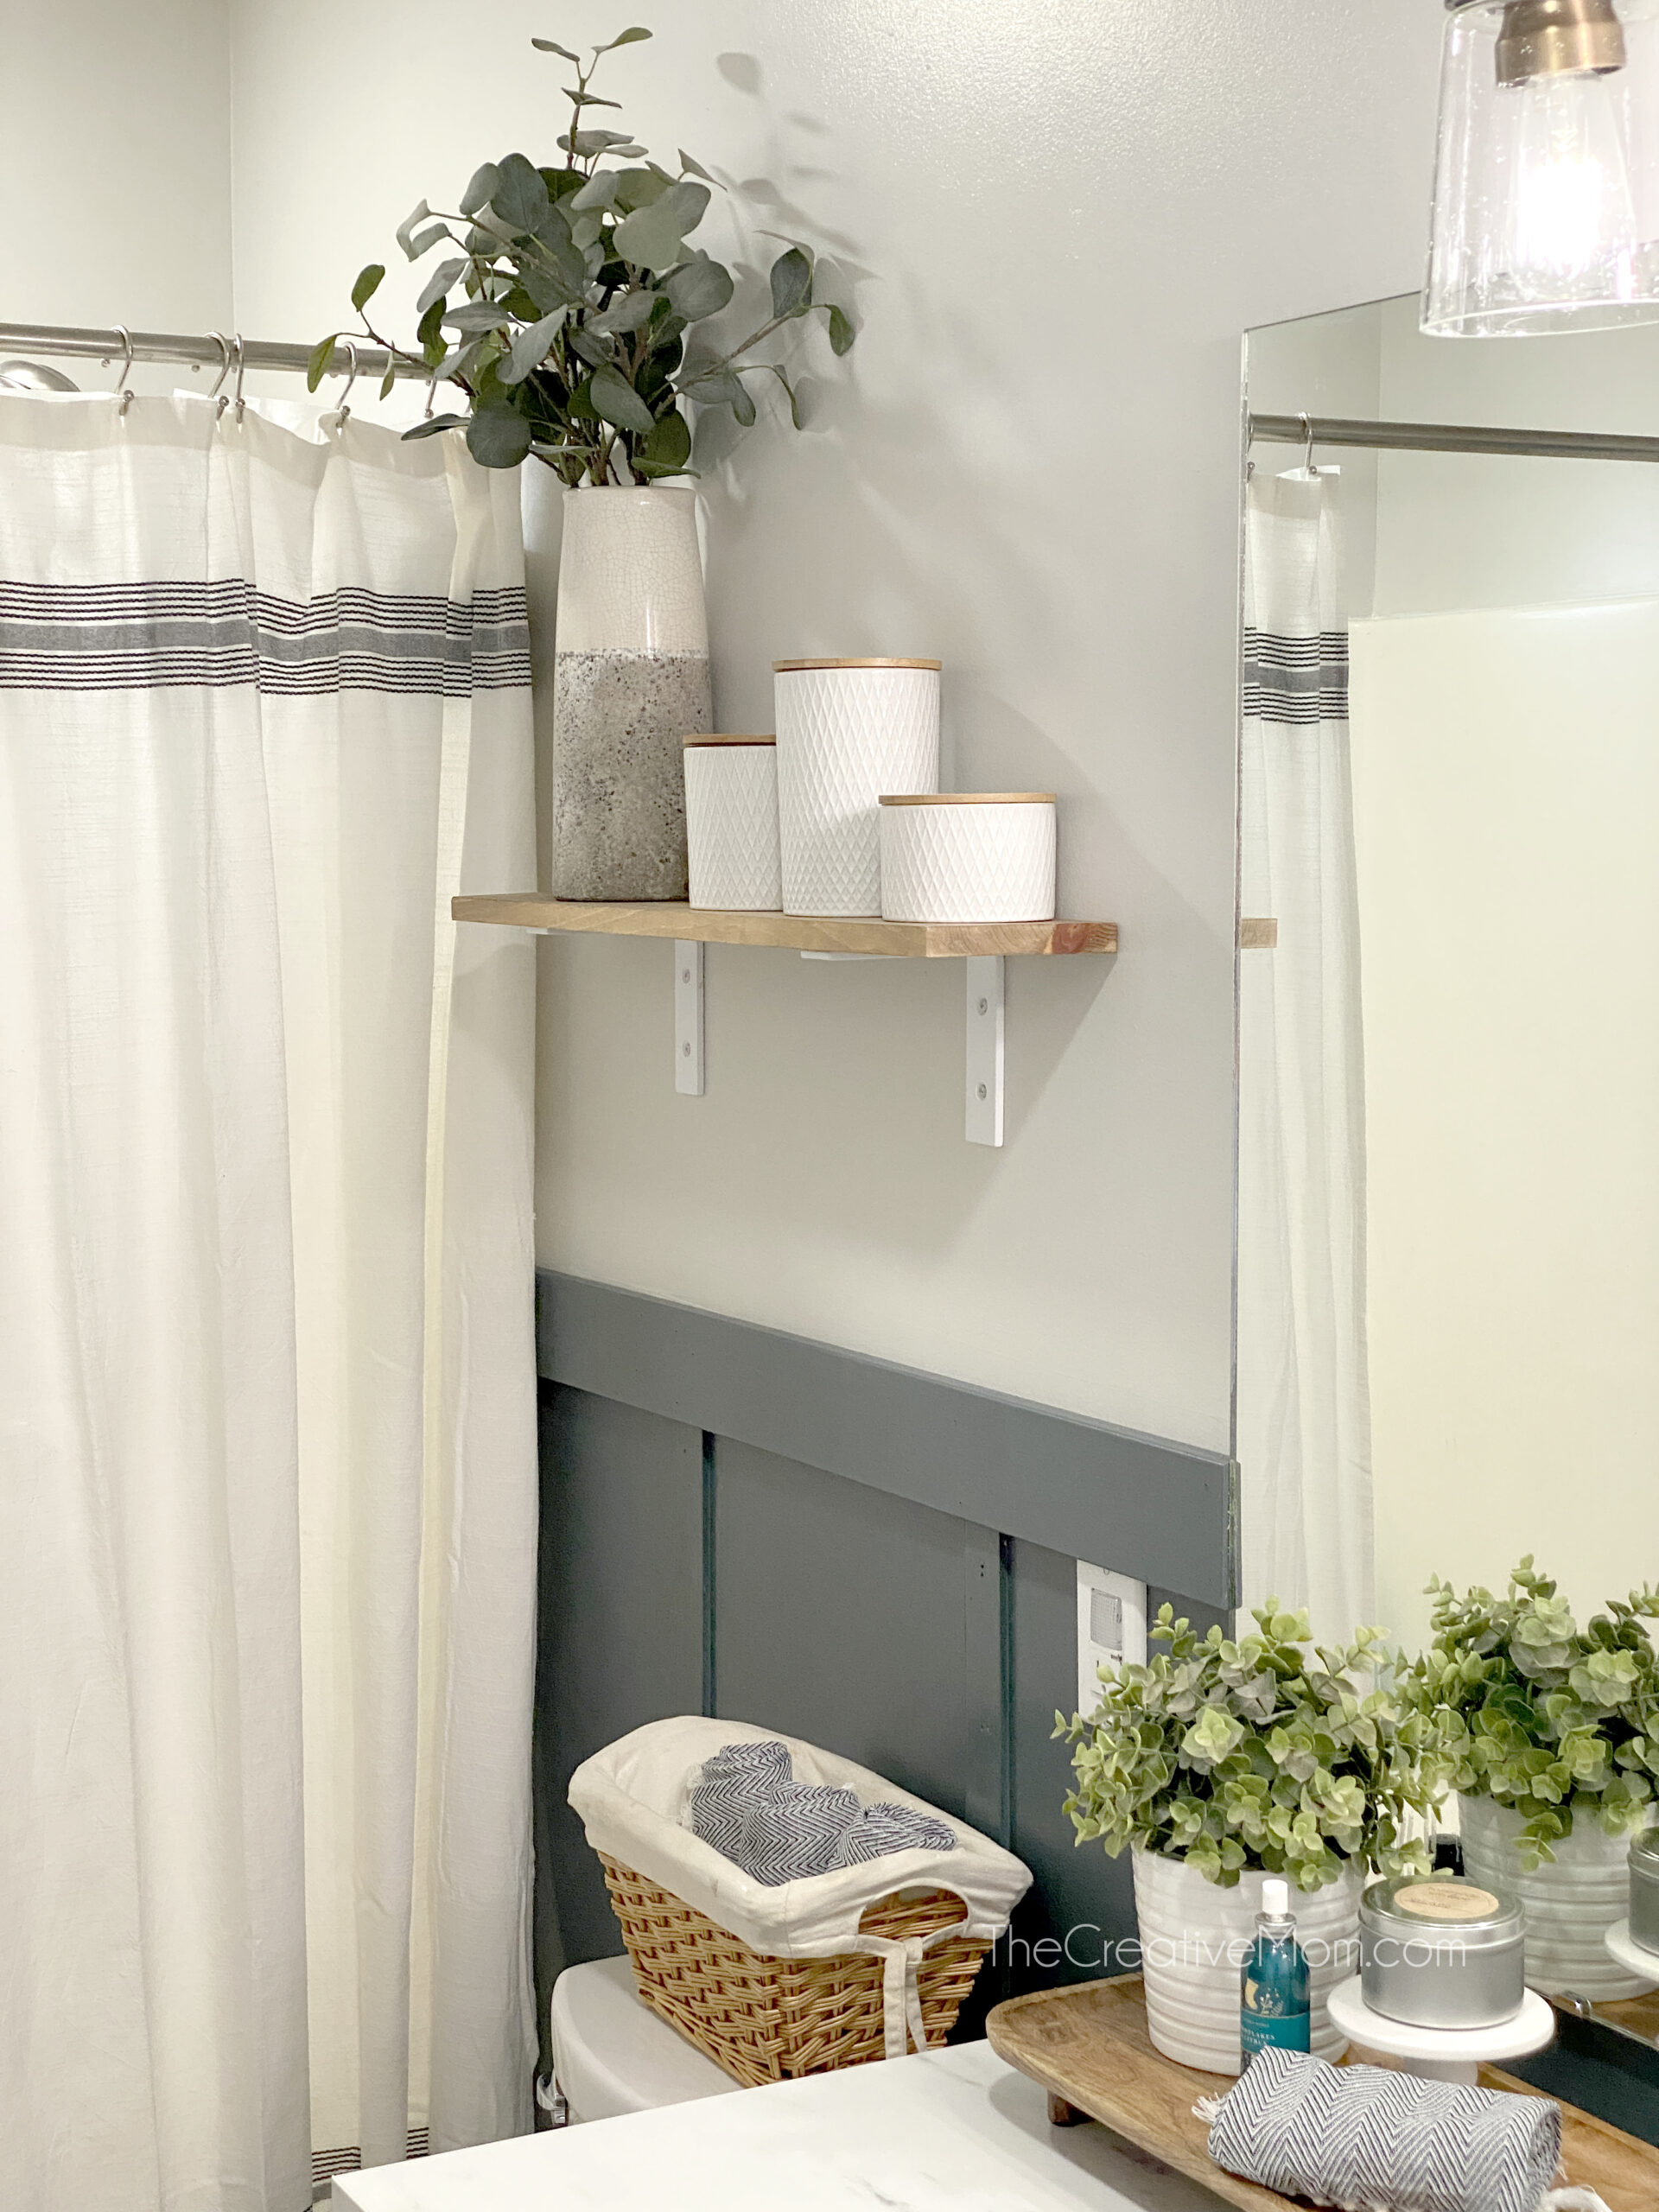 How to Install a Simple Bathroom Shelf - The Creative Mom